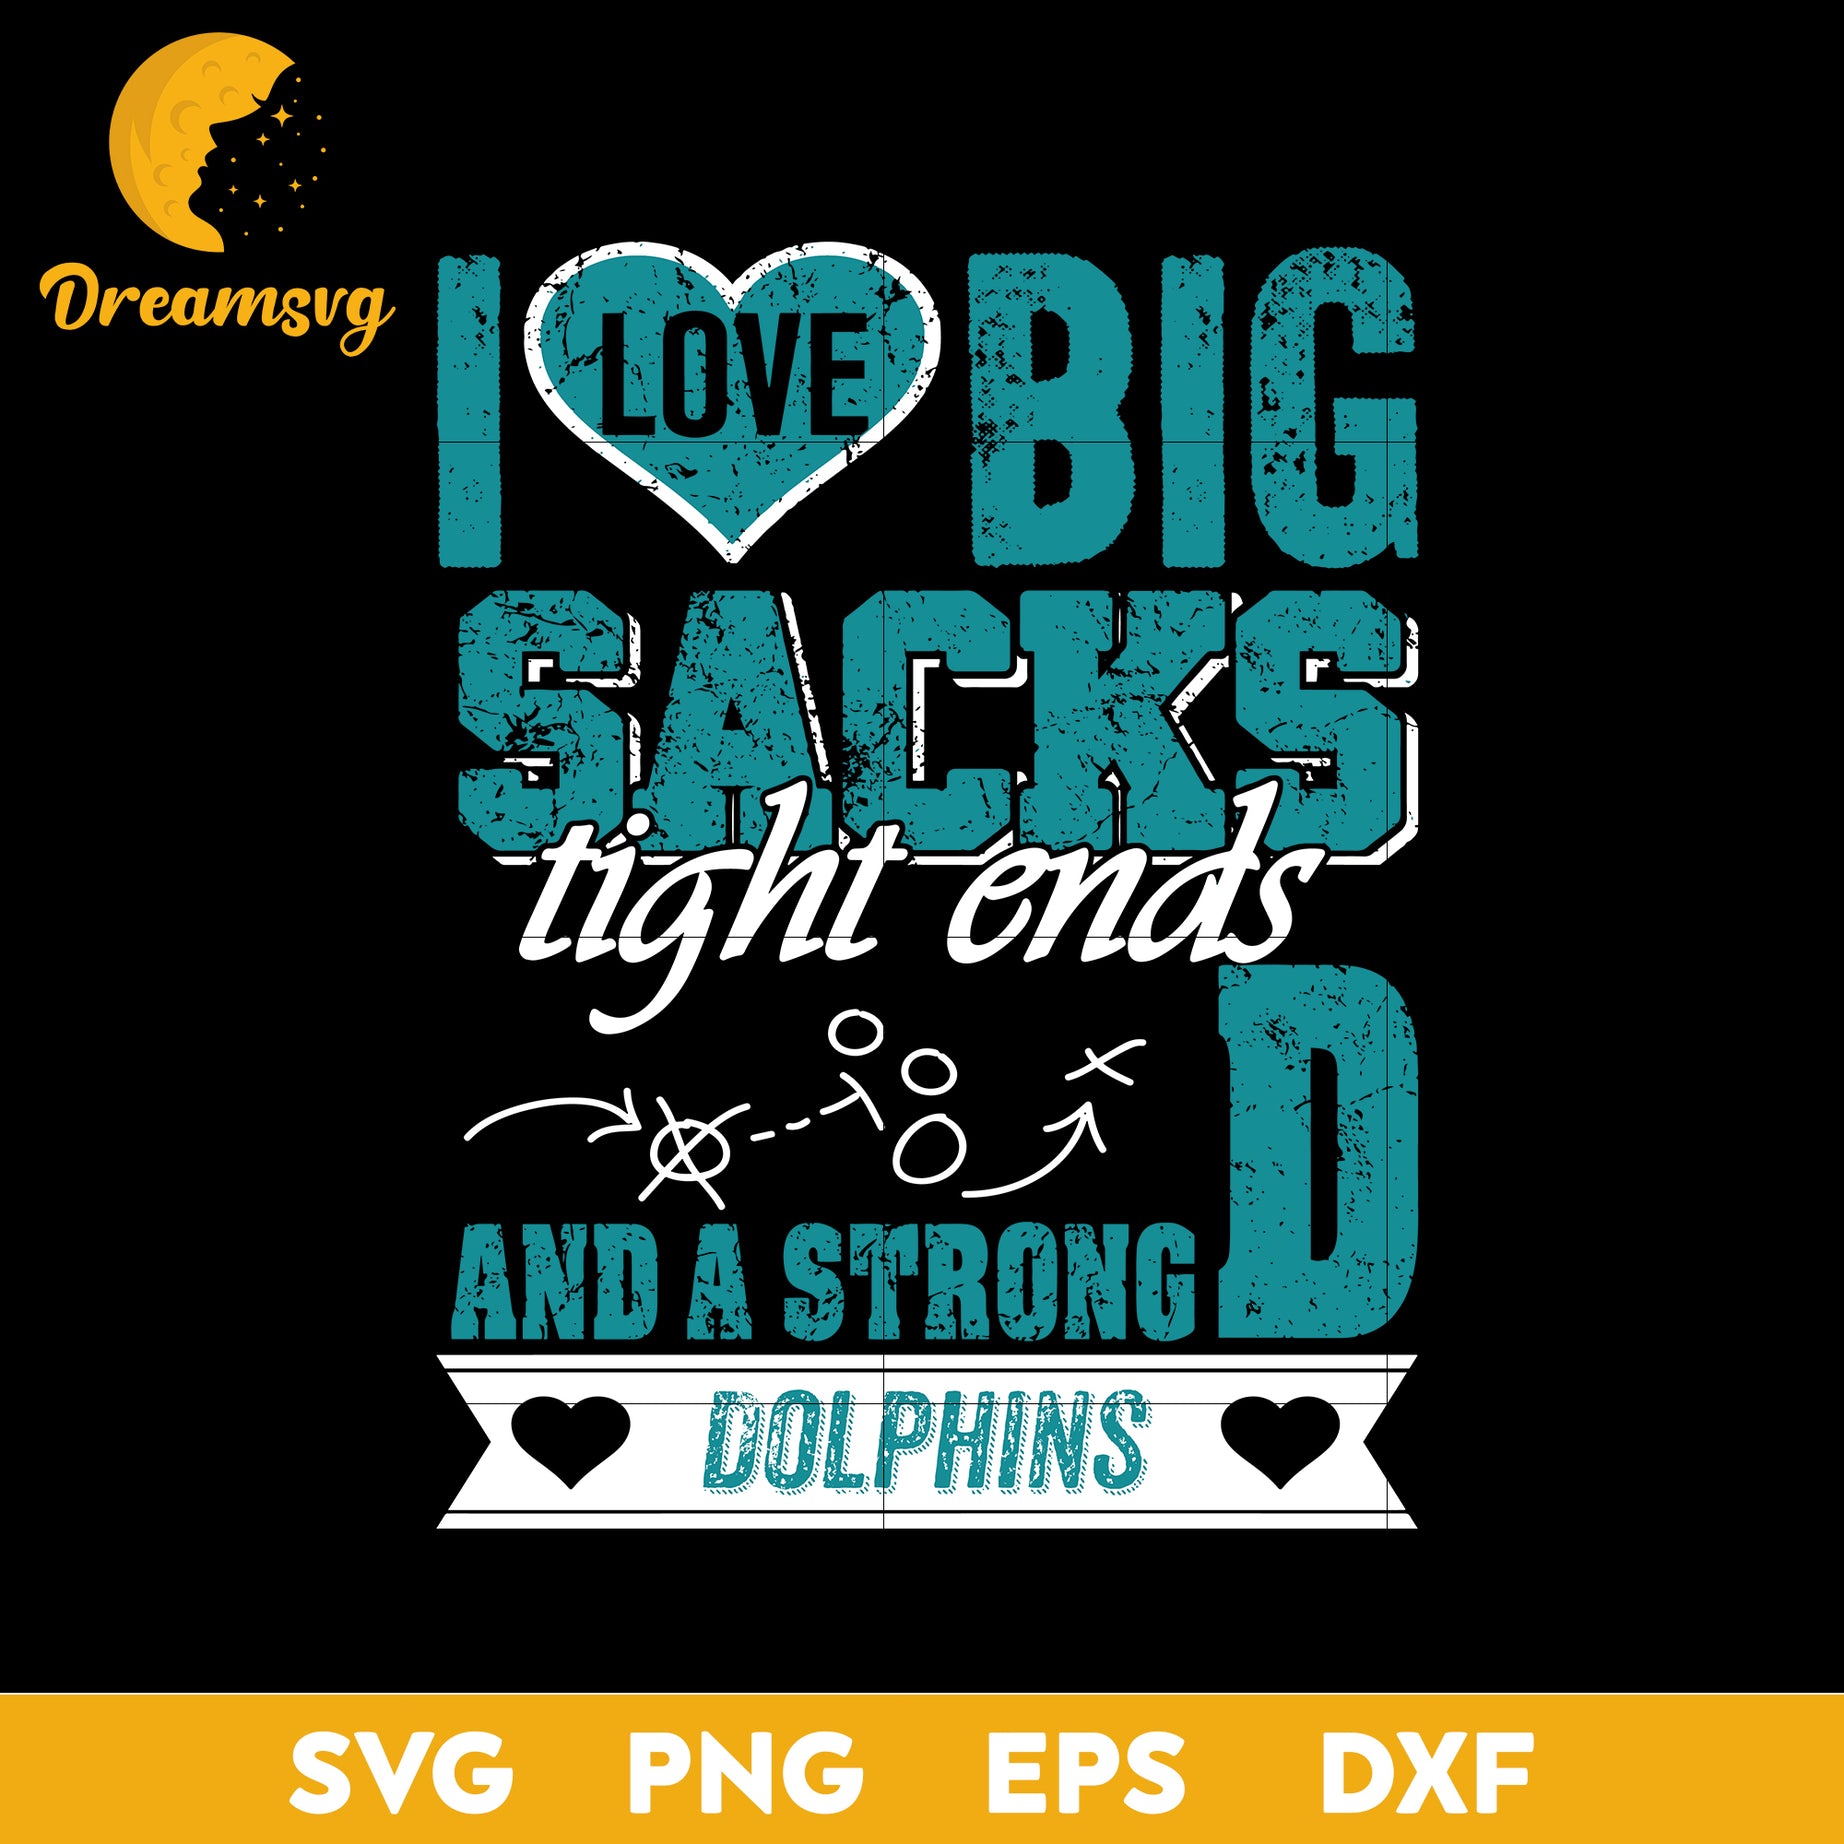 I Love Big Sacks tight ends and a strongD Miami Dolphins Svg, Nfl Svg, Png, Dxf, Eps Digital File.